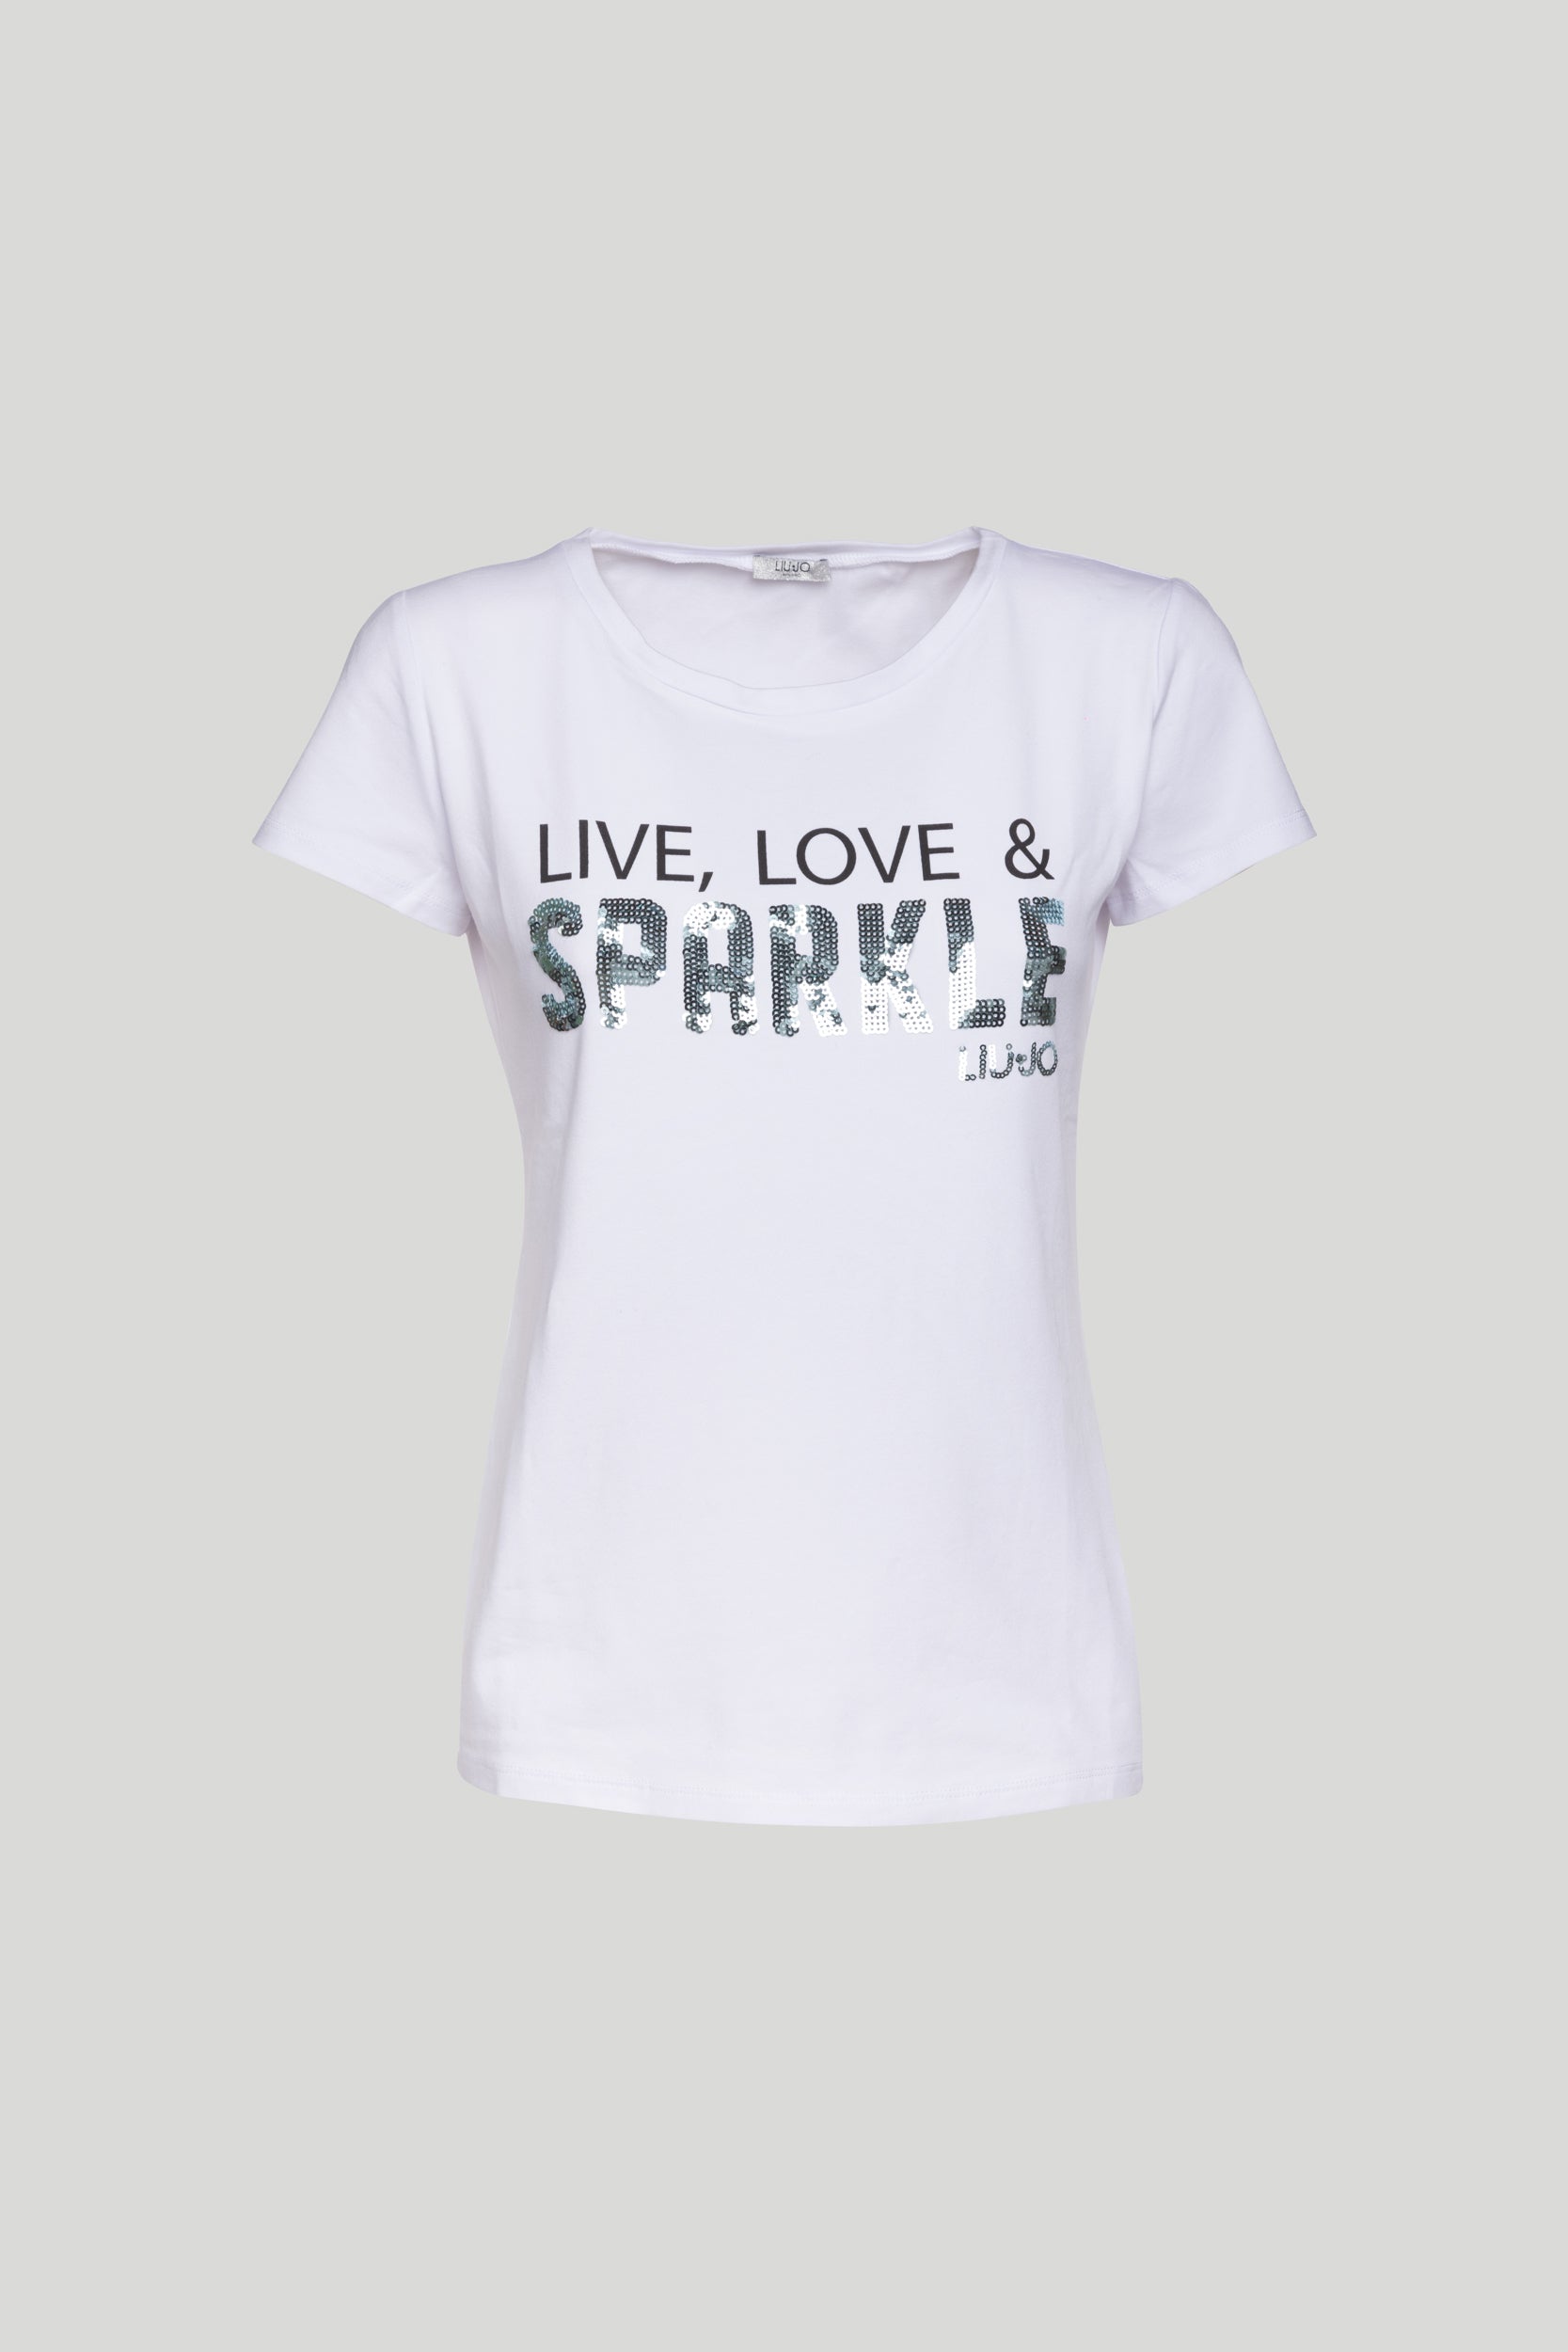 LIU-JO T-Shirt Bianca "Live' ,'Love & Sparkle"